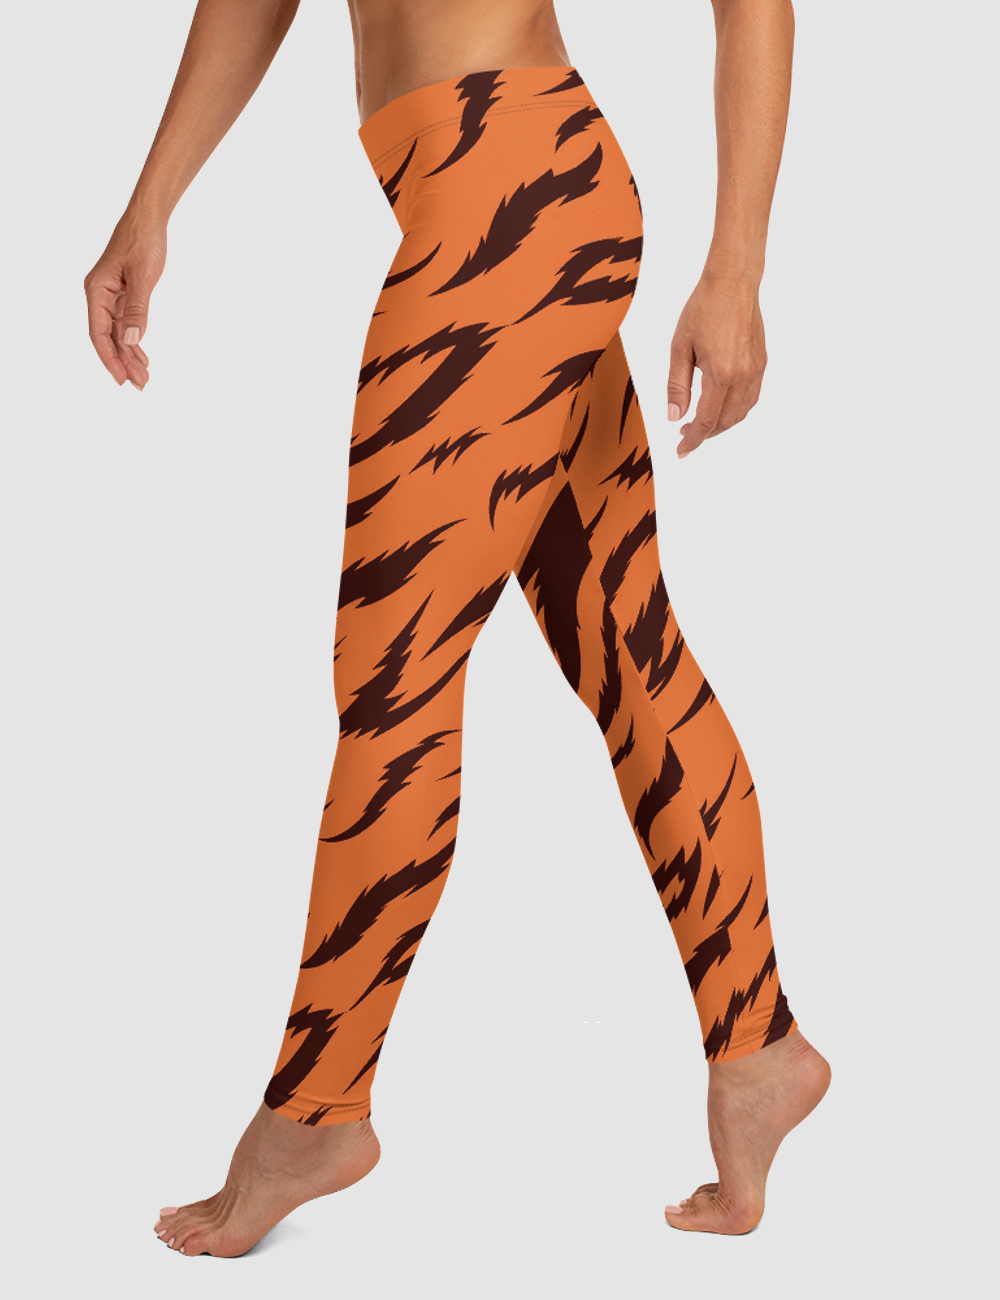 Orange Tiger Stripes | Women's Standard Yoga Leggings OniTakai